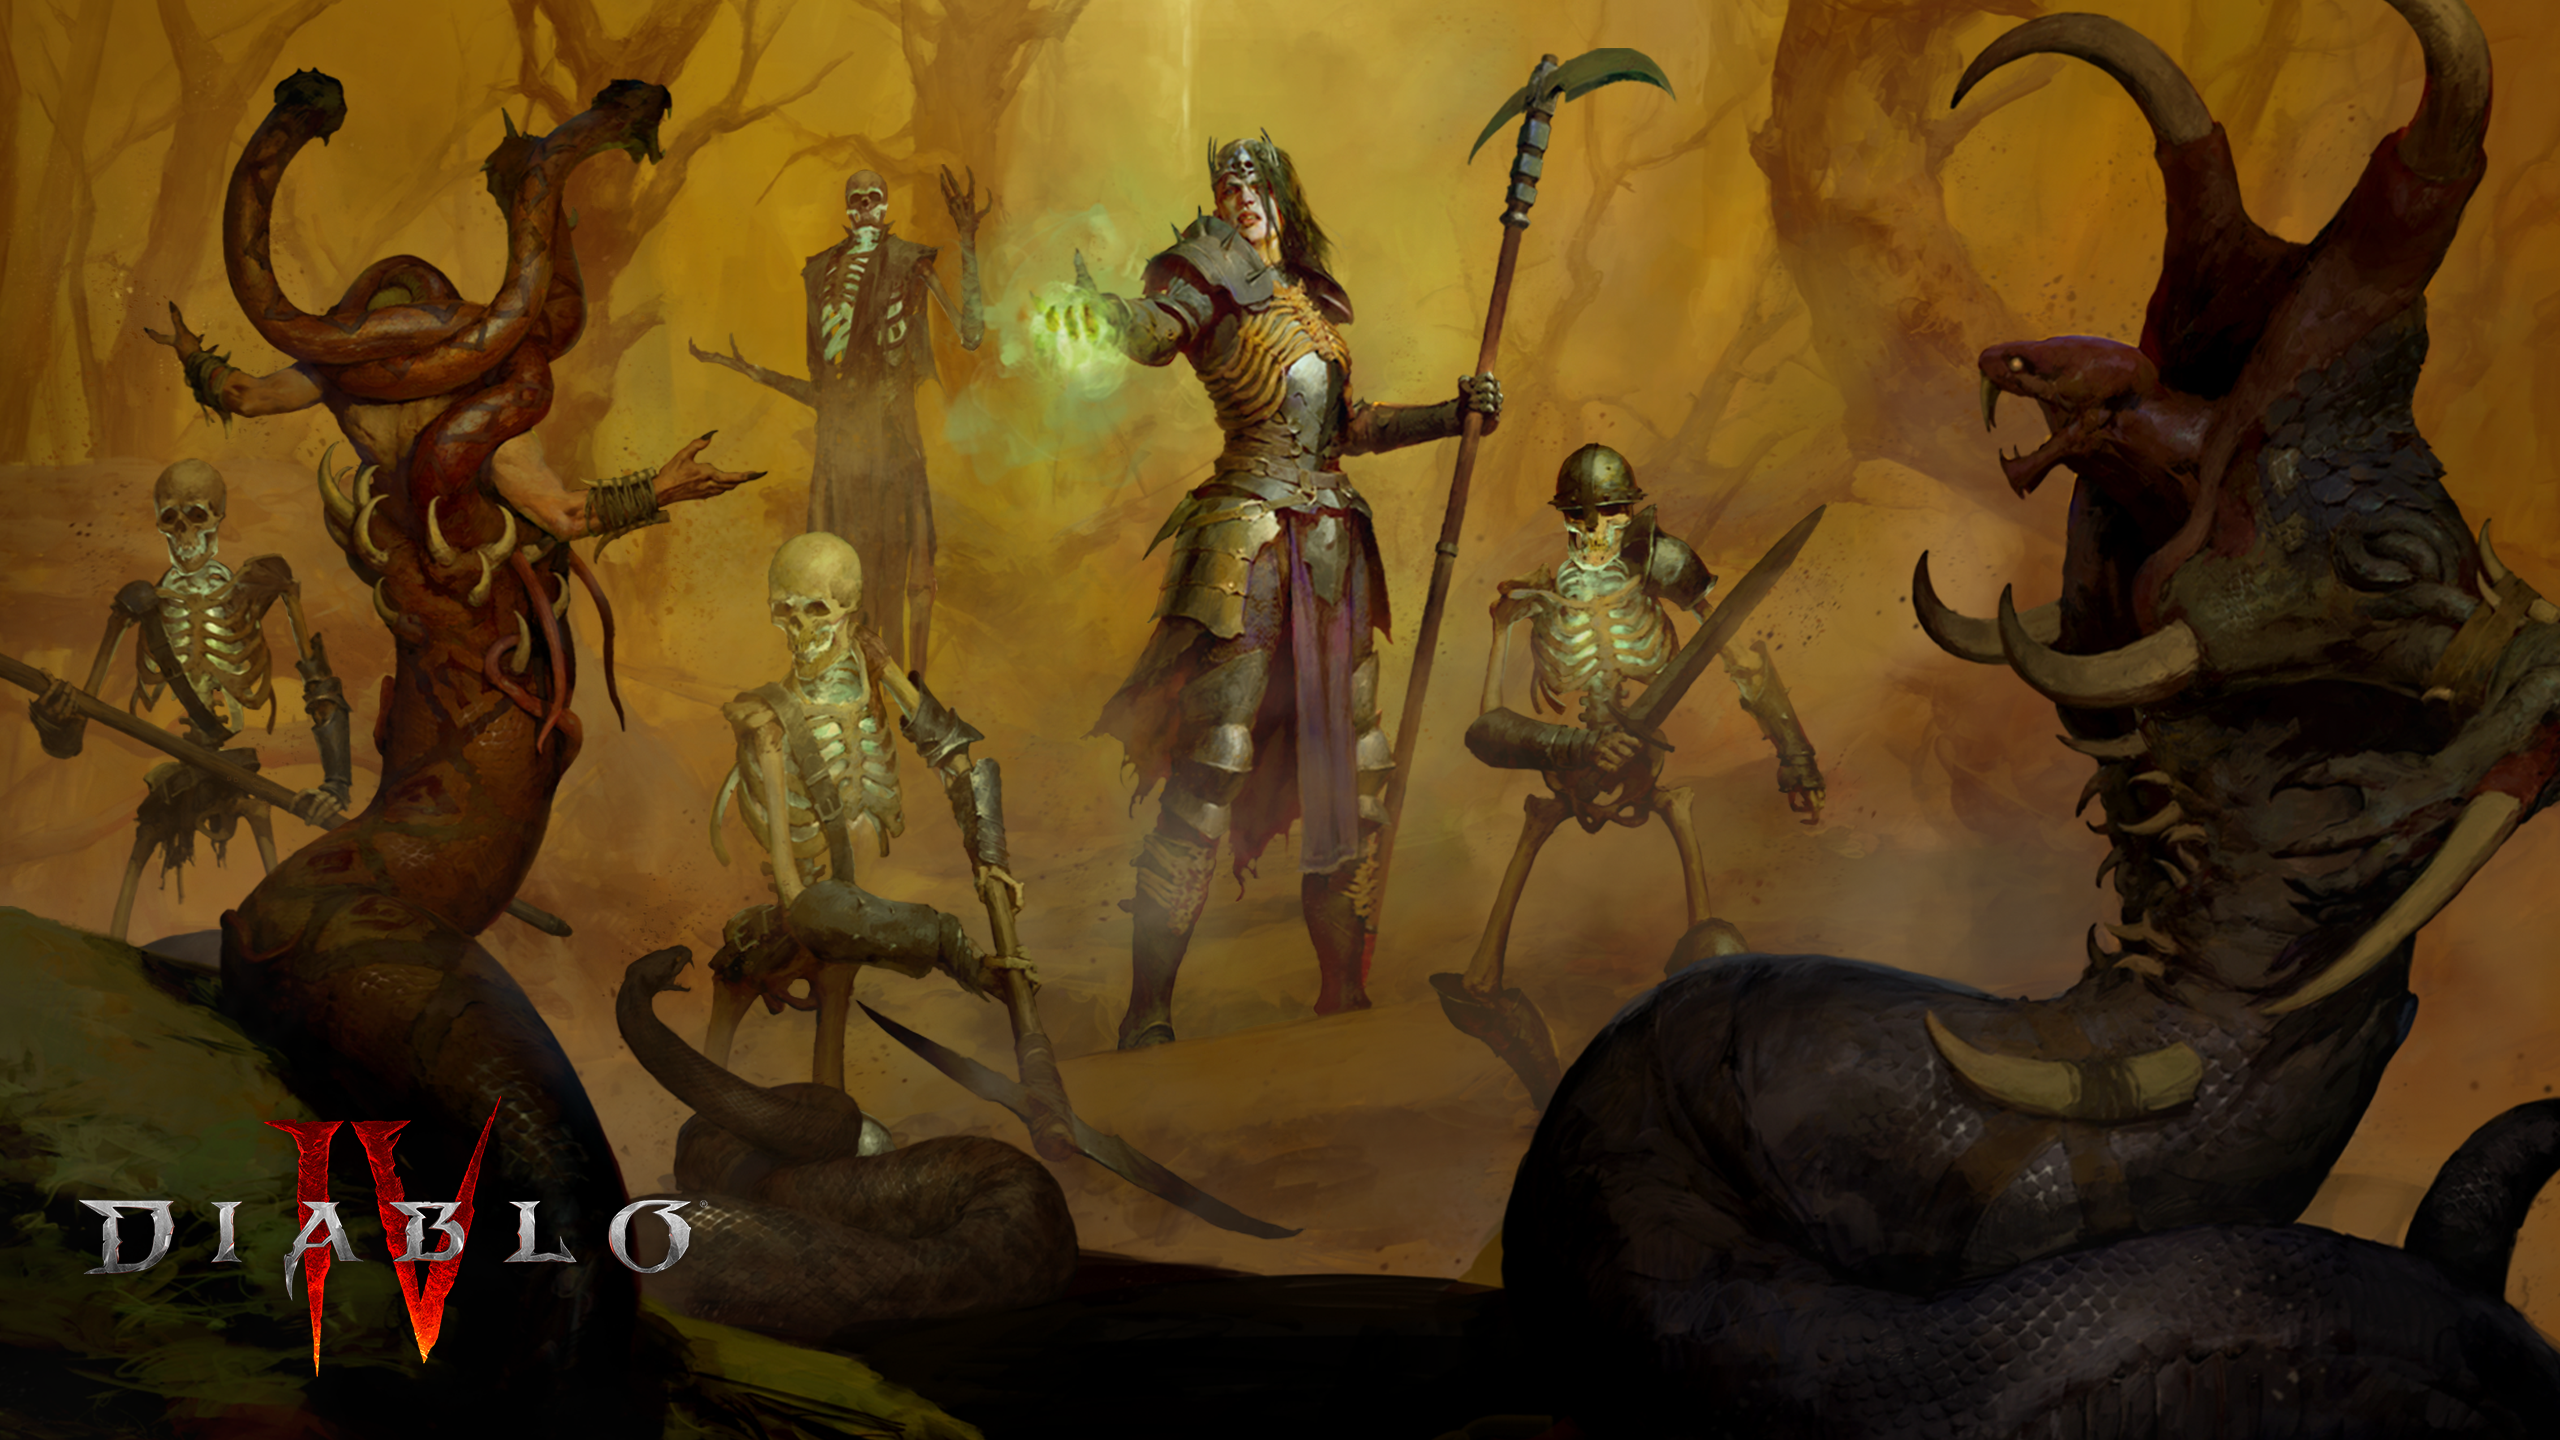 Diablo IV Diablo Video Game Art Blizzard Entertainment Video Game Characters Armor Video Games Skele 2560x1440